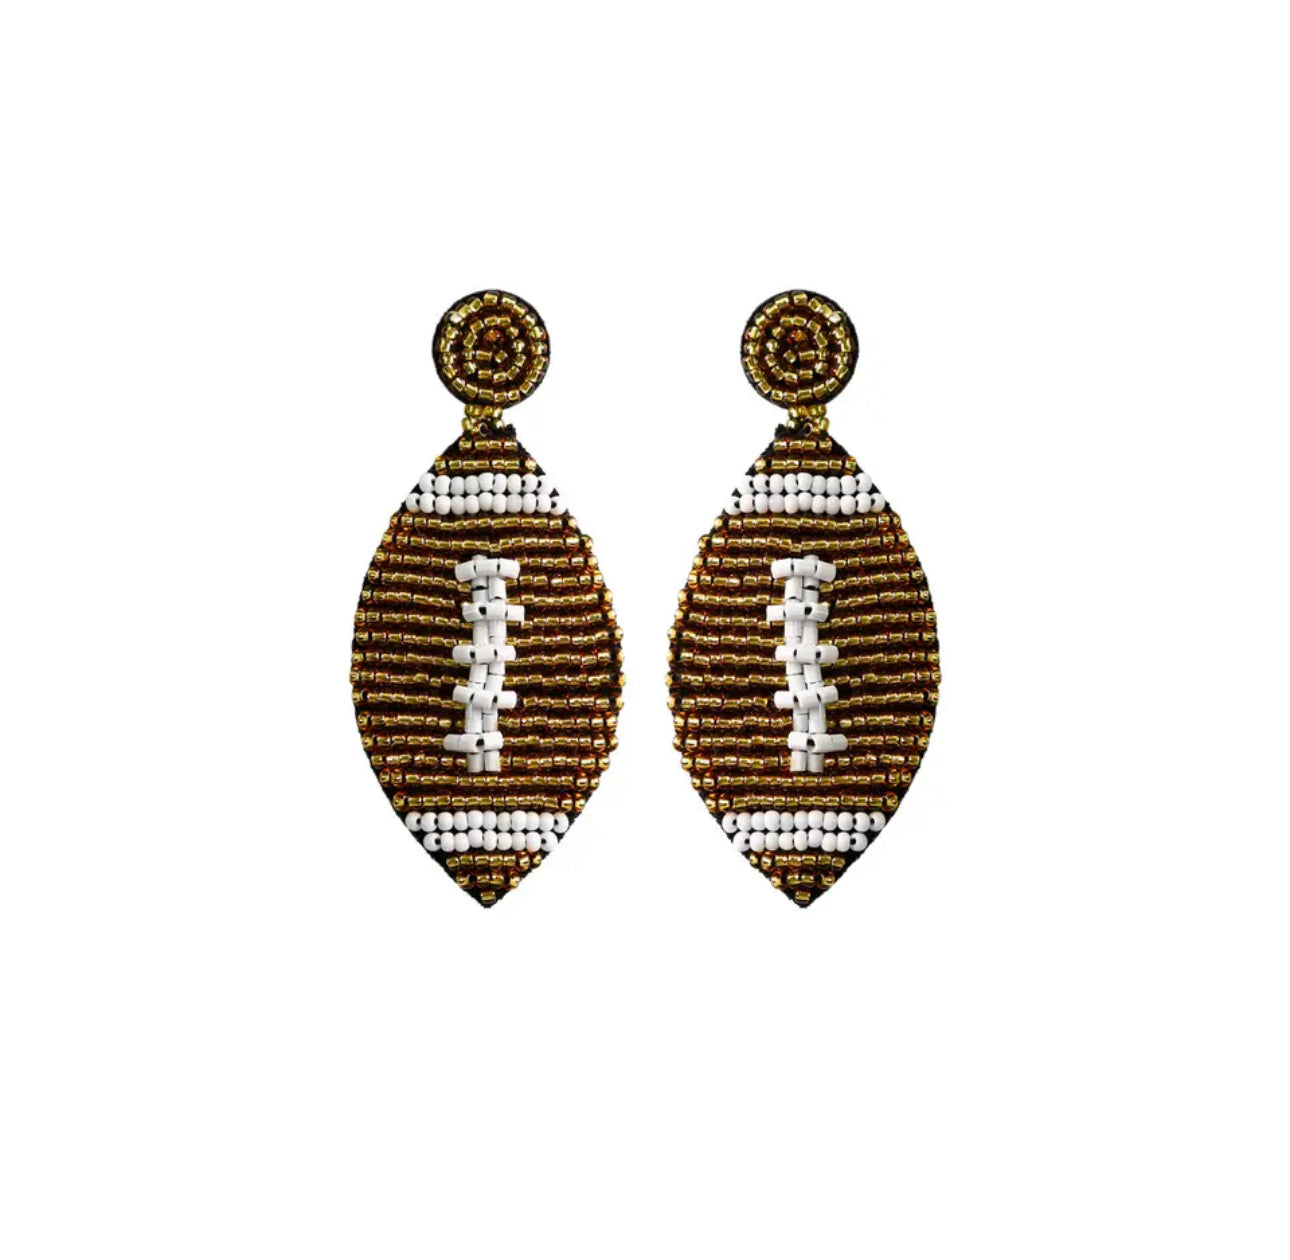 Erika Williner Designs - Football beaded earrings